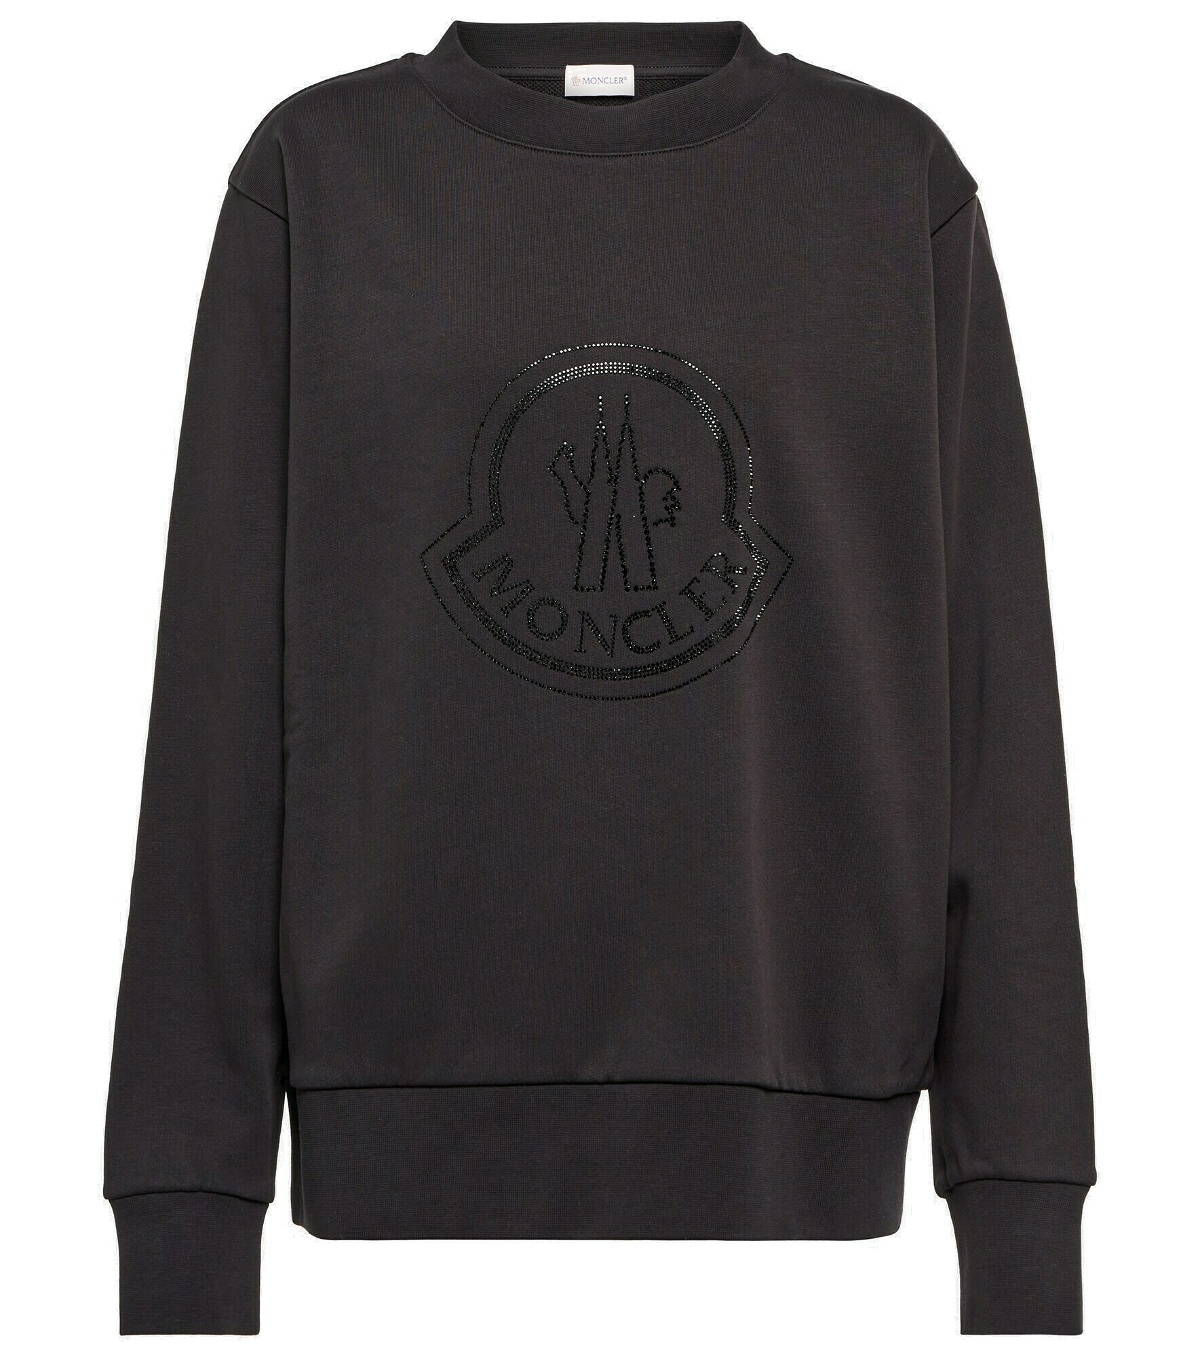 Moncler - Logo cotton-blend jersey sweatshirt Moncler